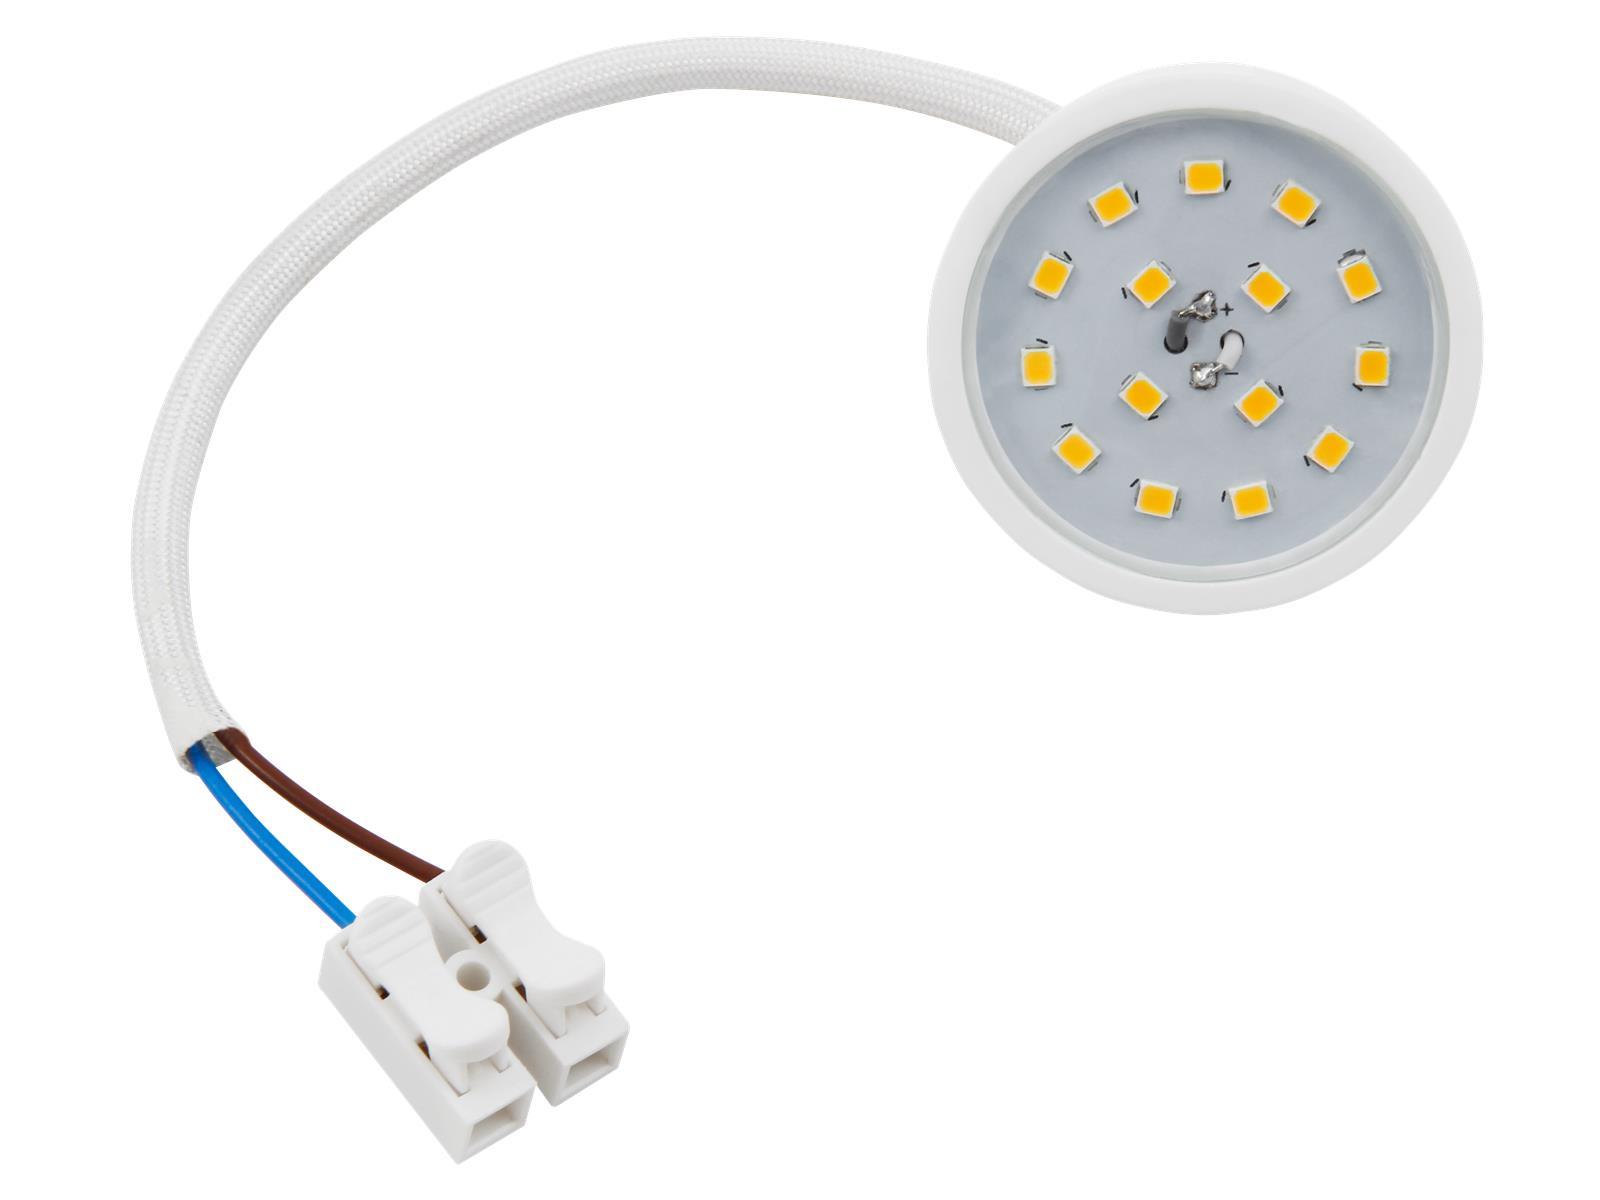 LED-Modul McShine, 7W, 470 Lumen, 230V, 50x23mm, warmweiß, 3000K, step-dimmbar